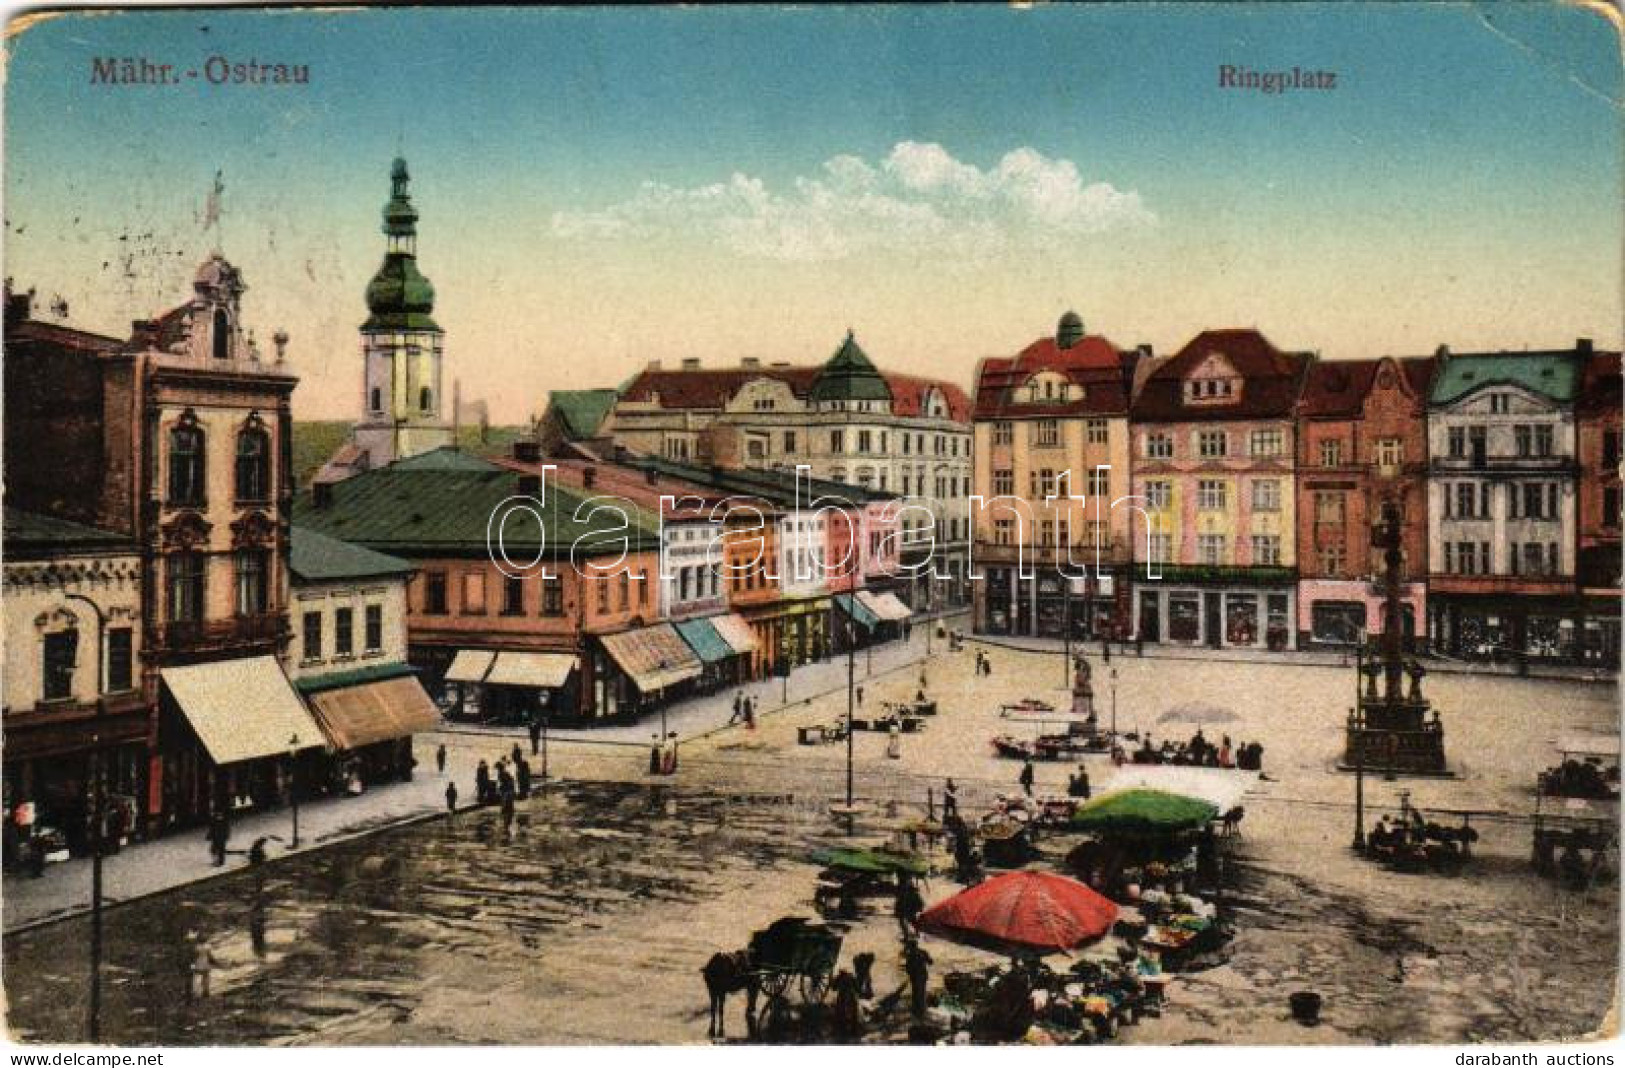 T2/T3 1917 Ostrava, Moravská Ostrava, Mährisch Ostrau; Ringplatz / Square, Market, Shops (EK) - Unclassified